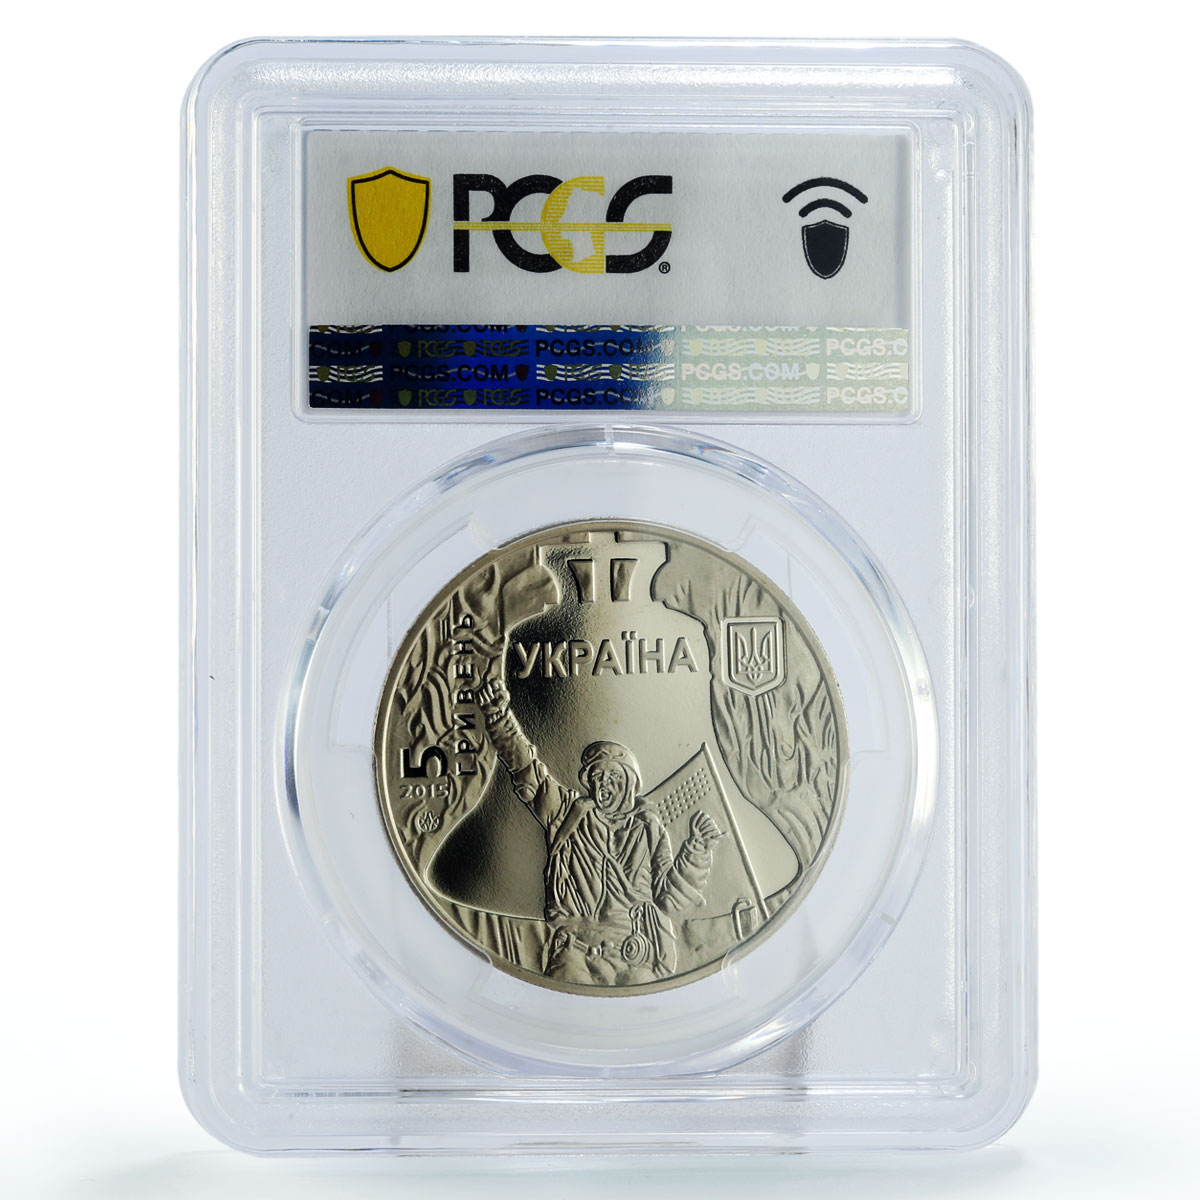 Ukraine 5 hryvnias Euromaidan Revolution of Dignity MS68 PCGS CuNi coin 2015